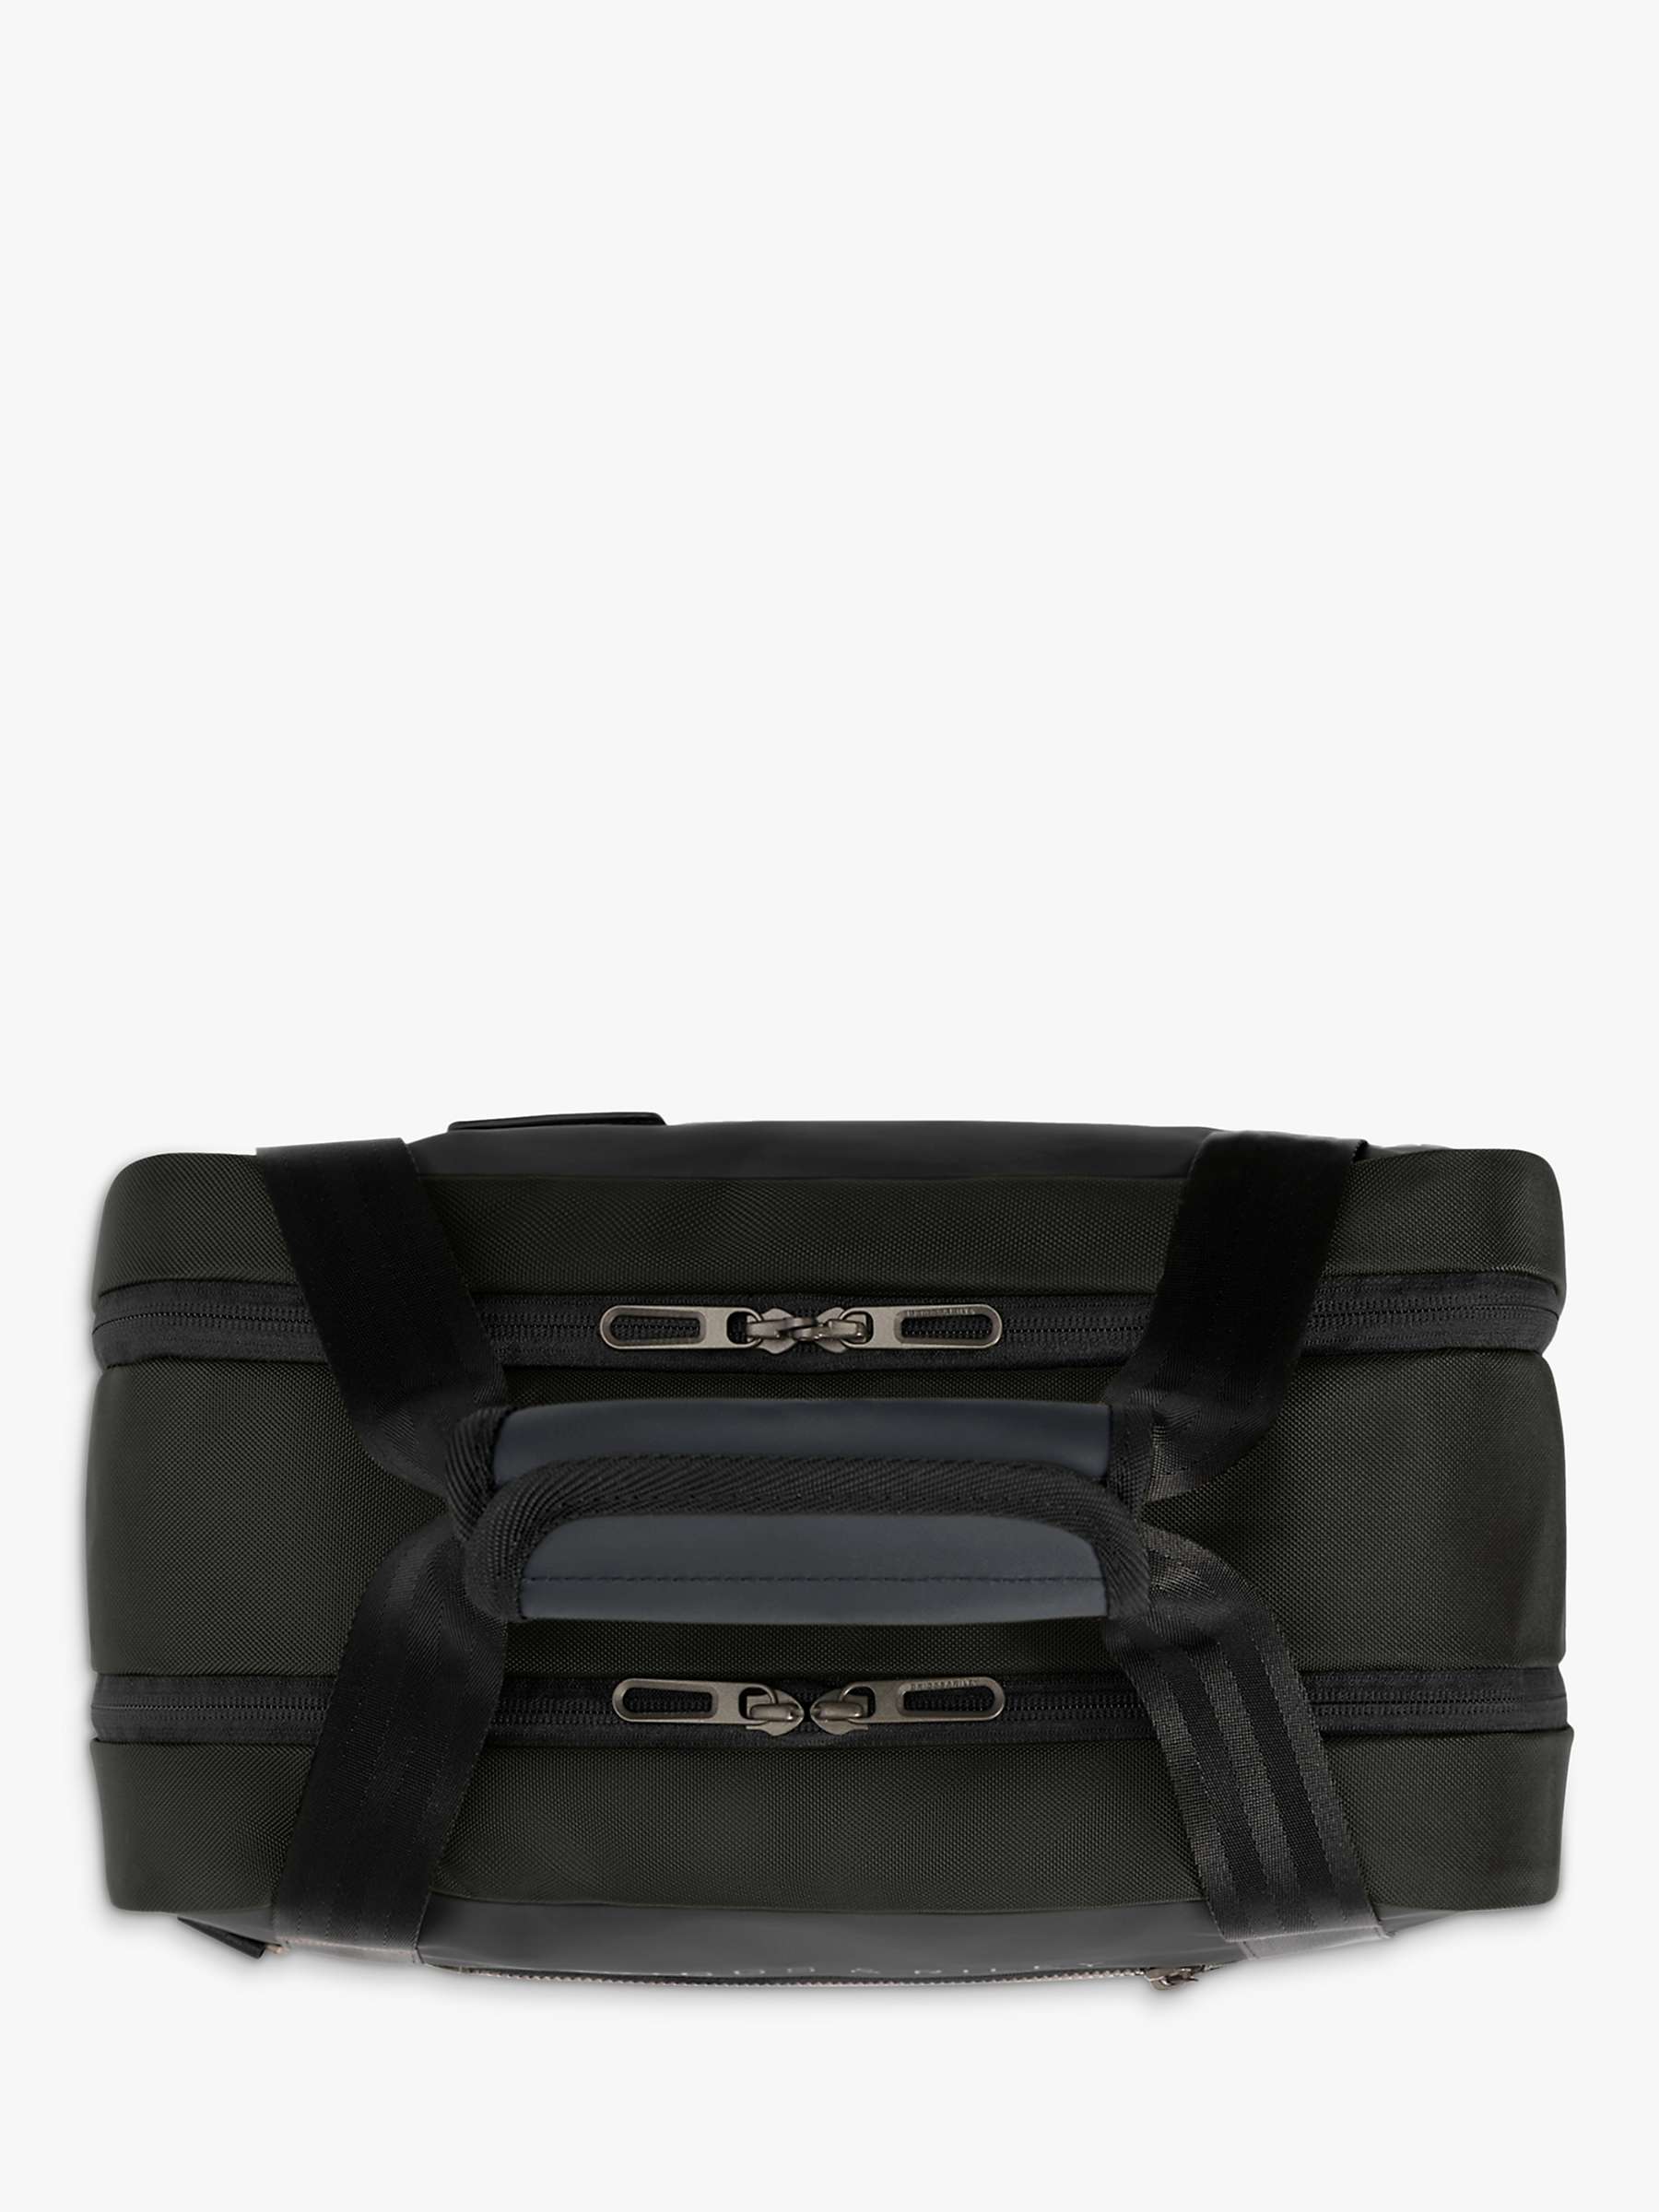 Briggs & Riley ZDX Underseat Cabin Bag, Black at John Lewis & Partners